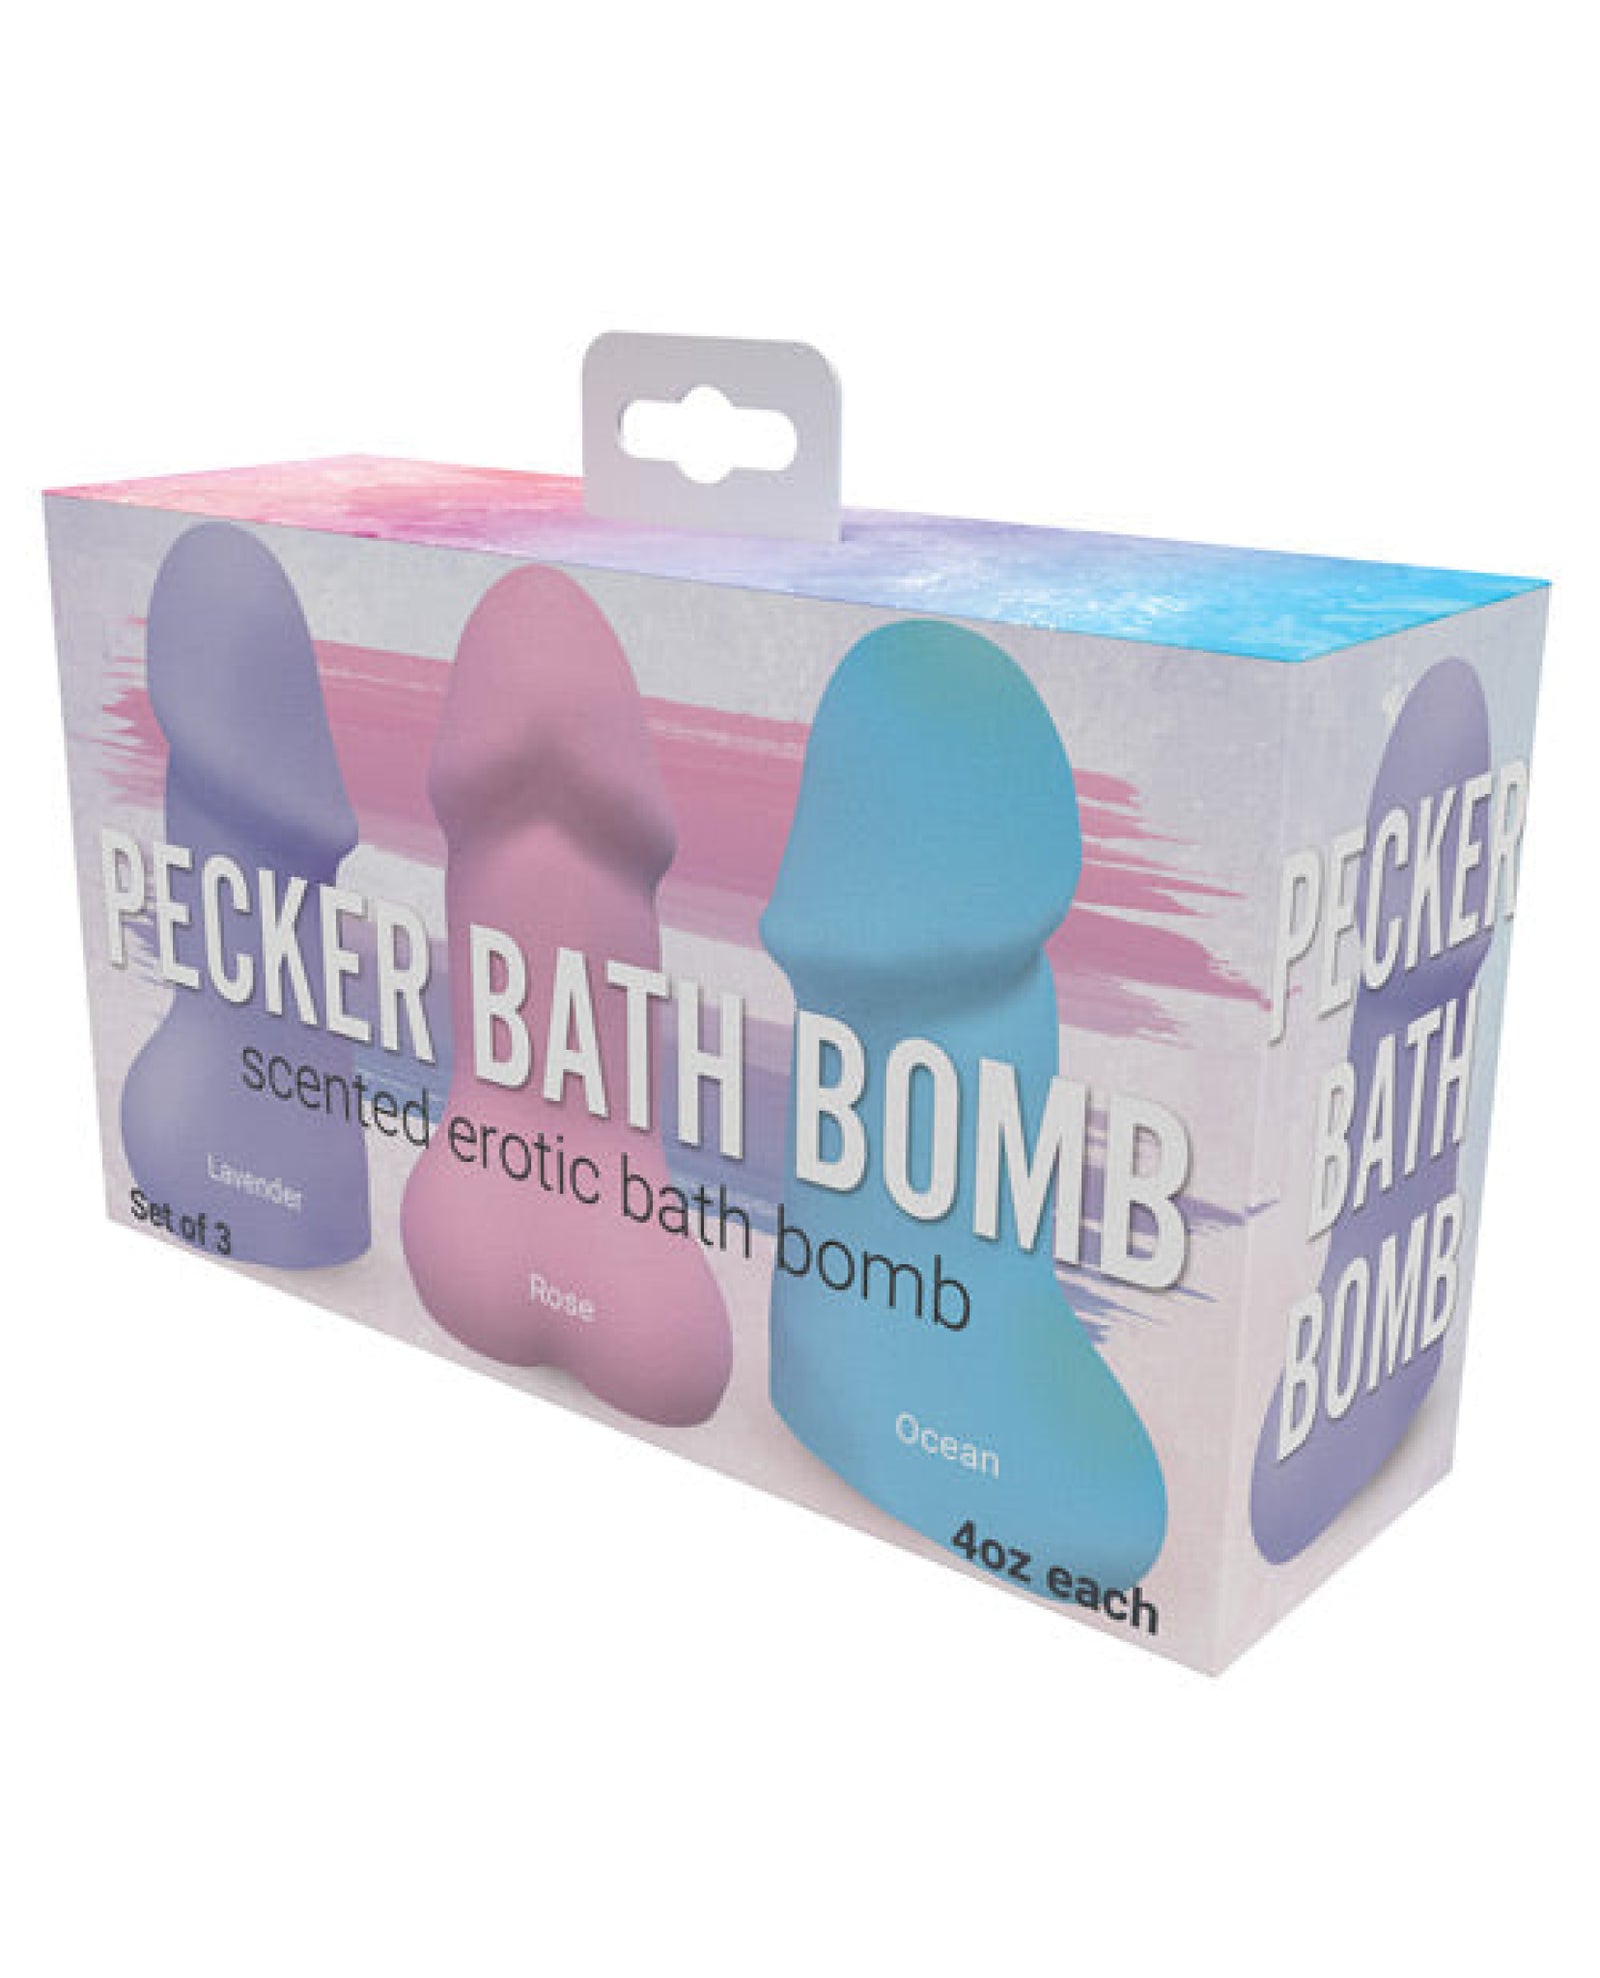 Pecker Bath Bomb - Pack Of 3 Hott Products